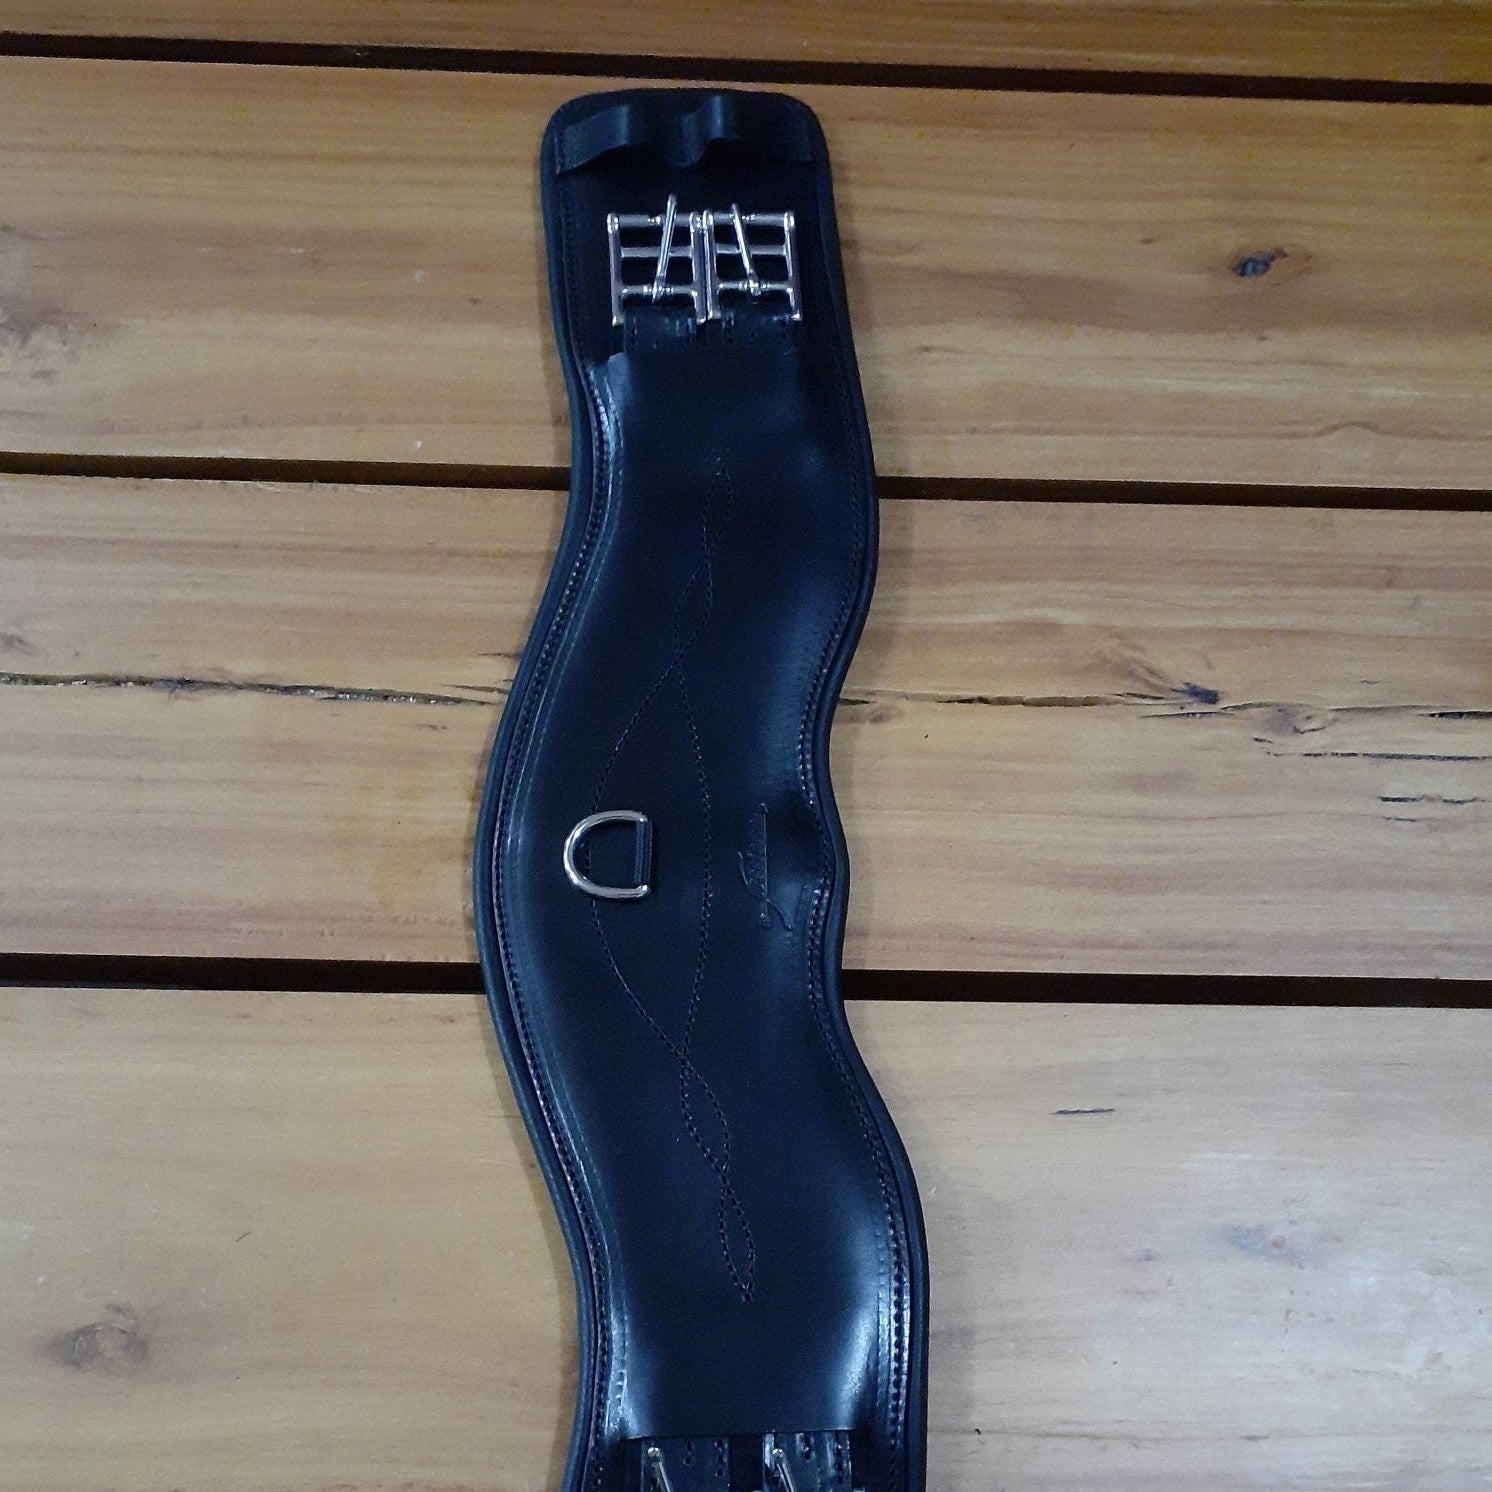 Freeform Anatomical Girth - Leather with Elastic - Freeform Saddles